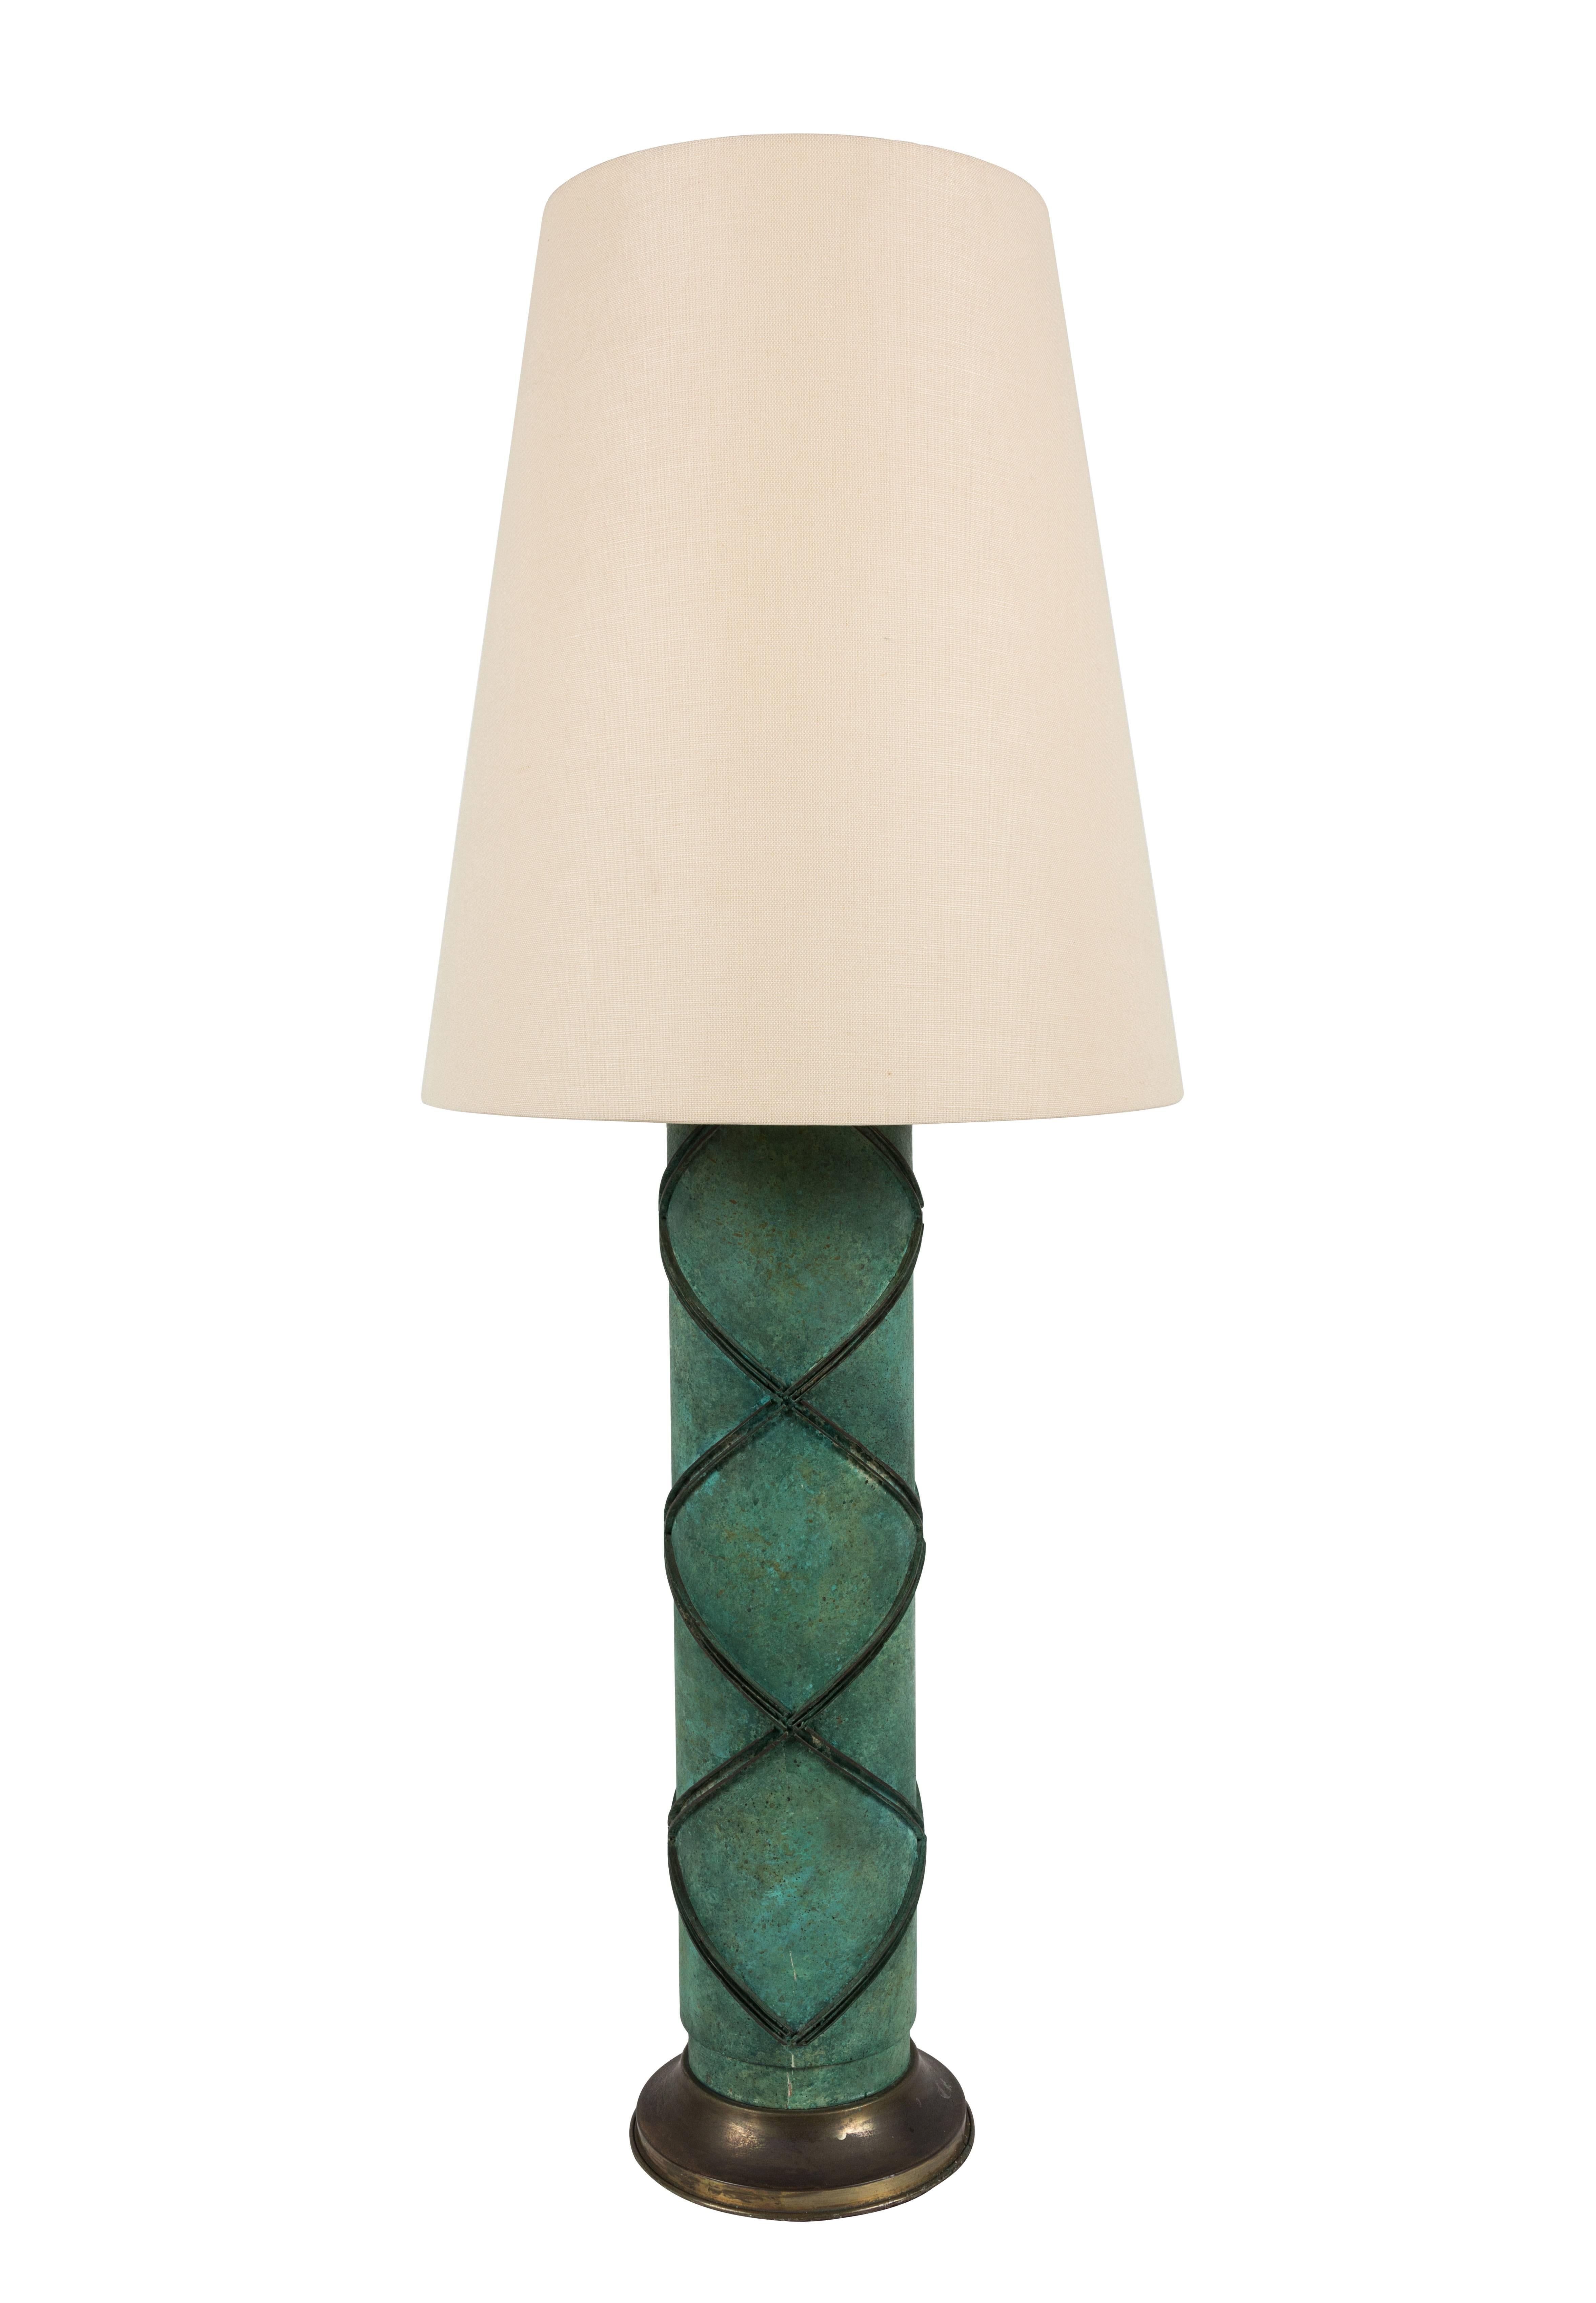 20th Century Midcentury Verdigris Table Lamp For Sale